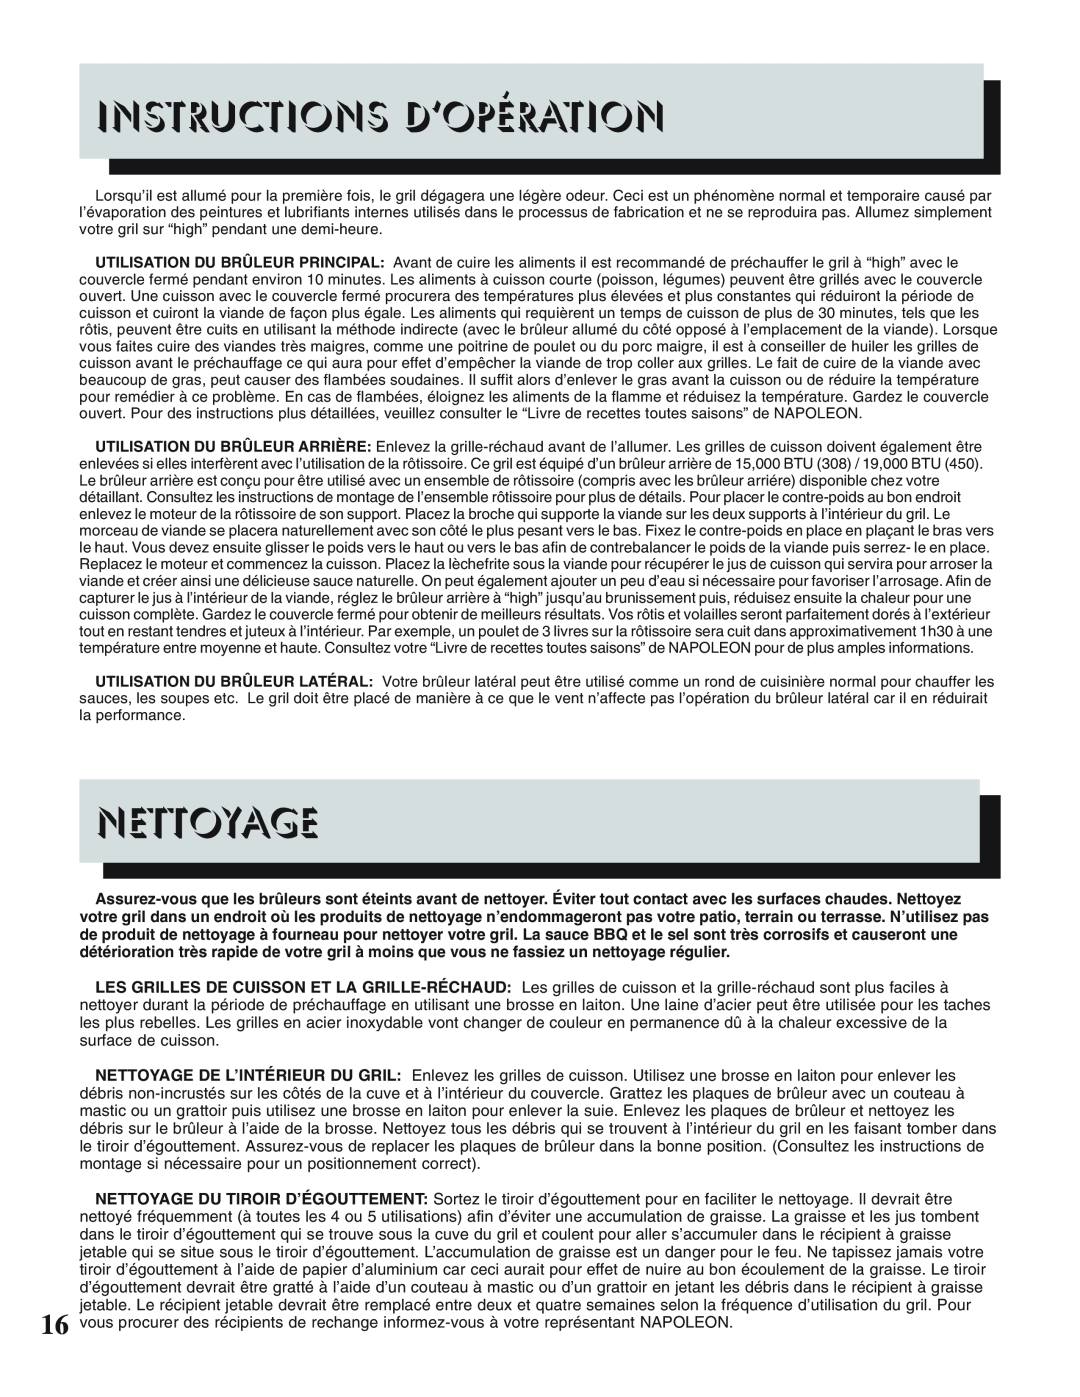 Napoleon Grills PRESTIGE II 308, 450 manual Instructions D’Opération, Nettoyage 